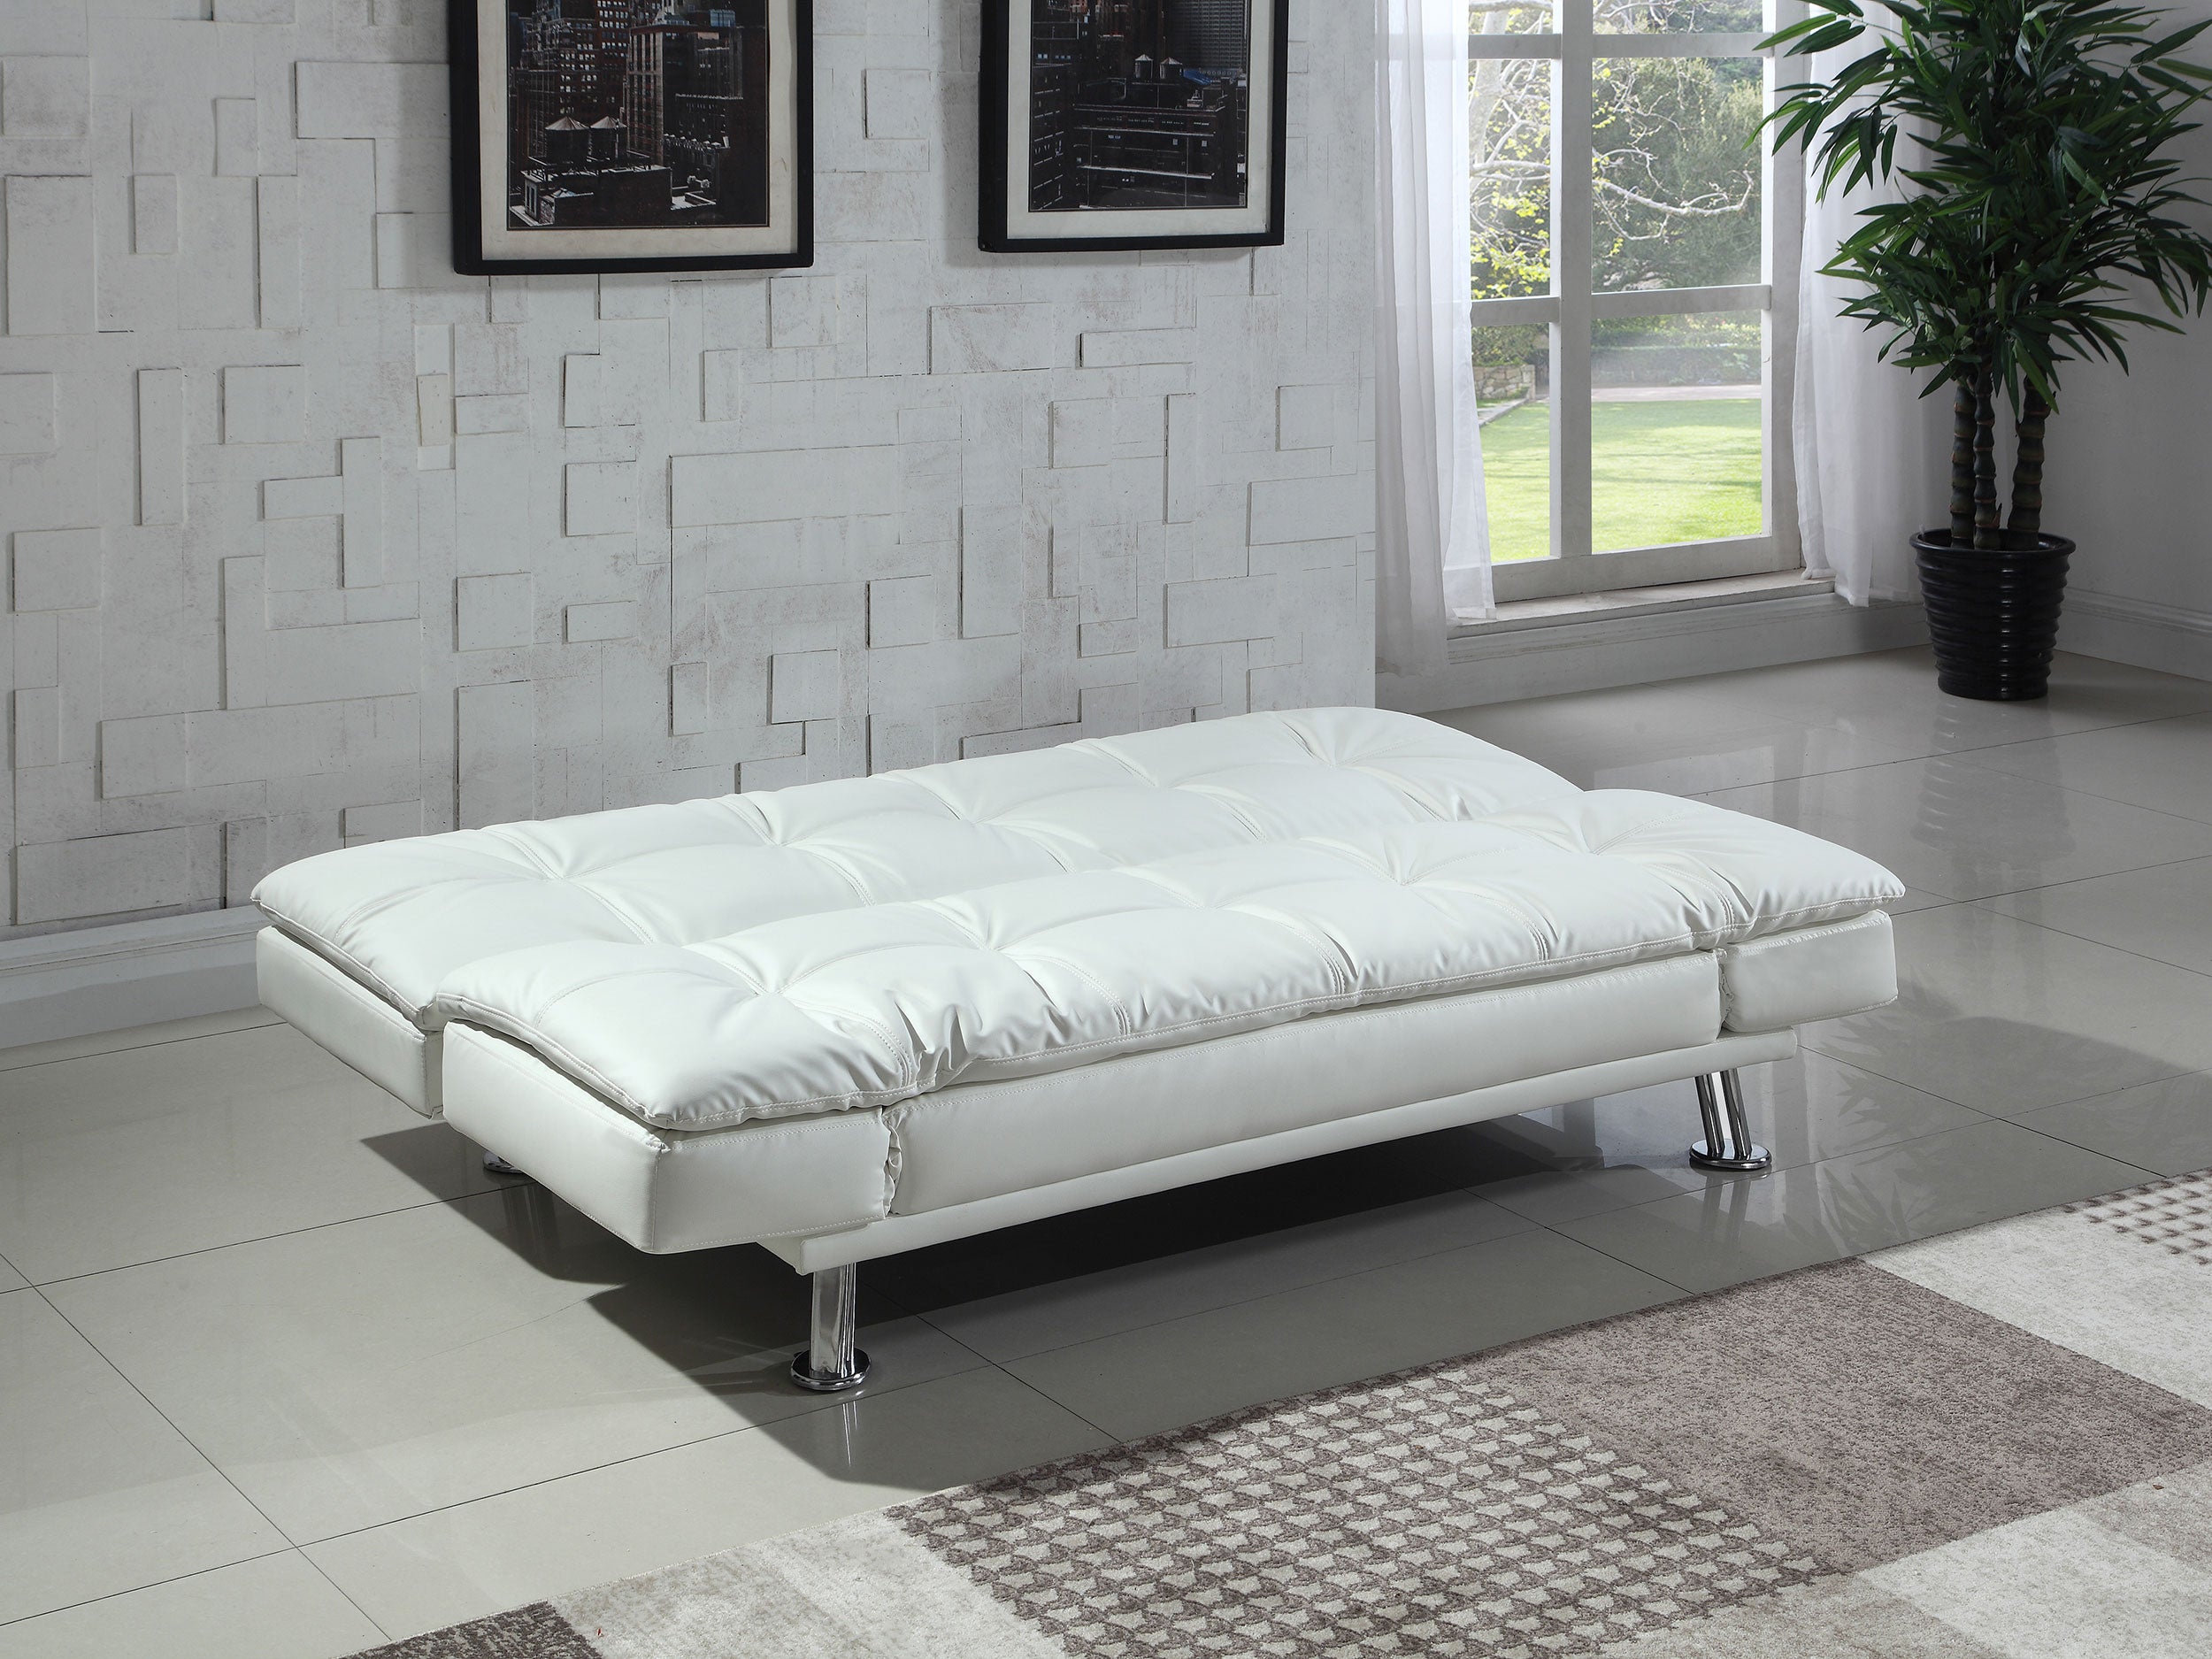 Coaster Dilleston Tufted Back Upholstered Sofa Bed White Default Title